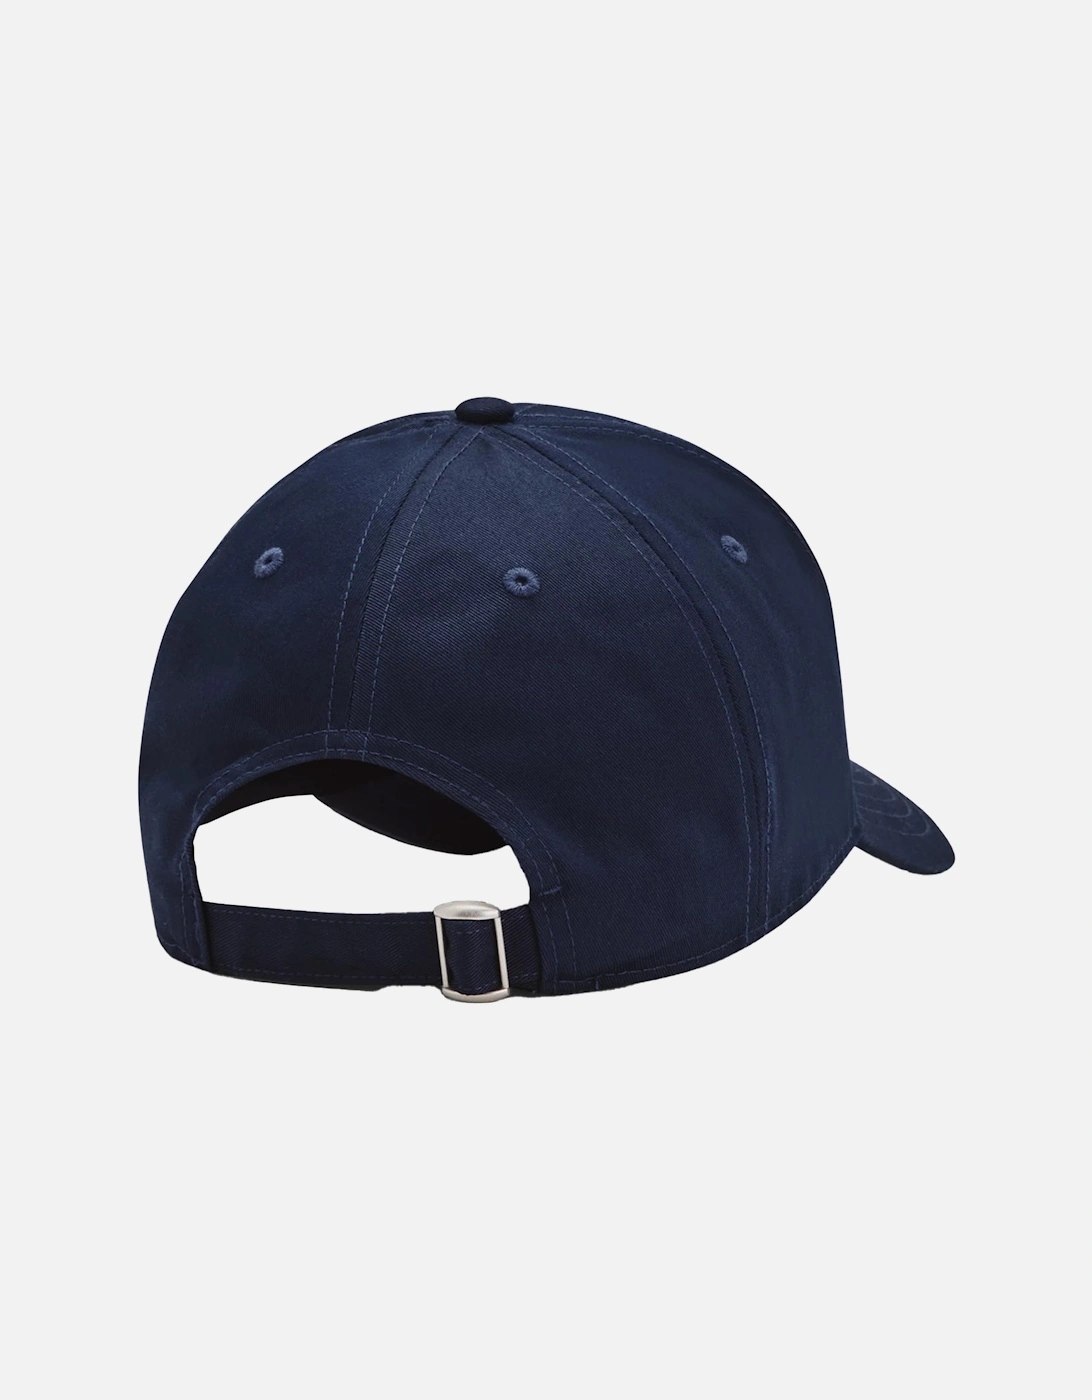 Mens Branded Adjustable Cap (Navy)